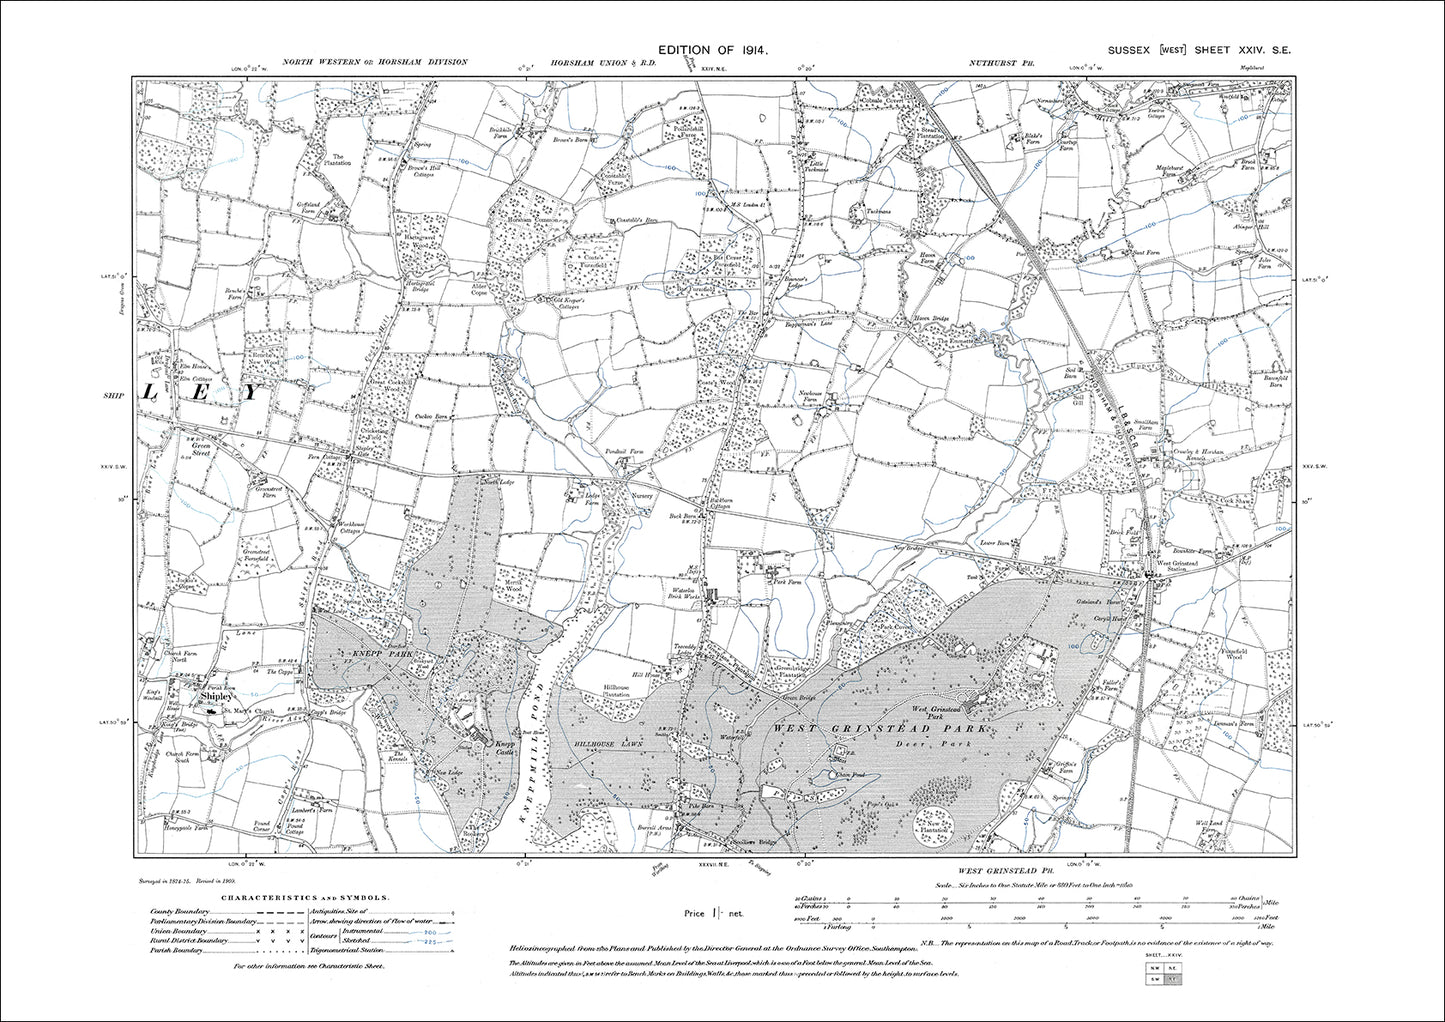 Shipley, West Grinstead (west), old map Sussex 1914: 24SE